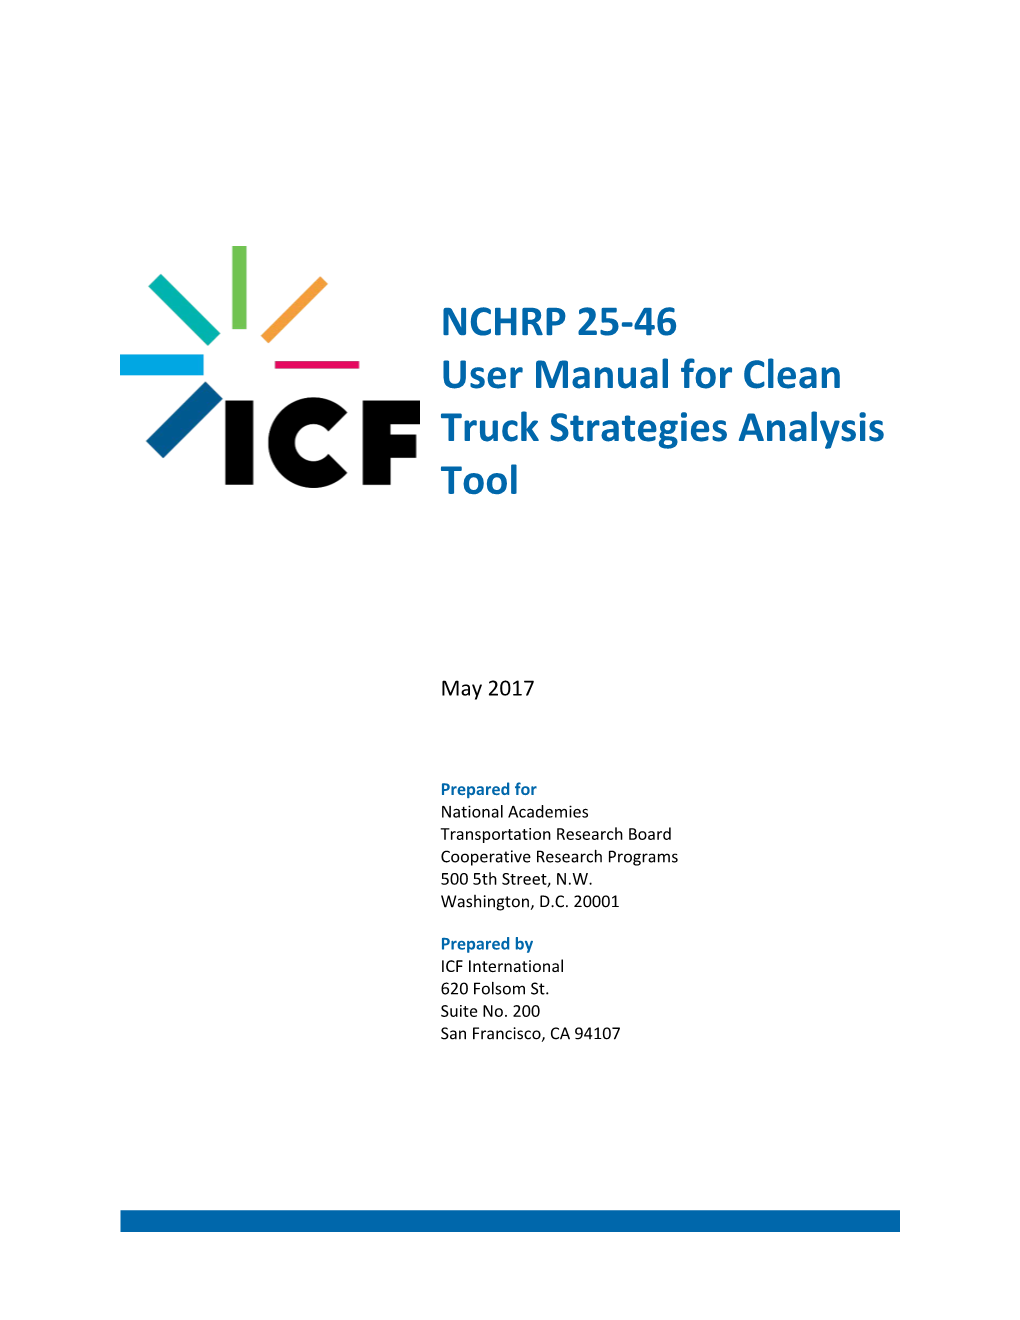 User Manual for Clean Truck Strategies Analysis Tool